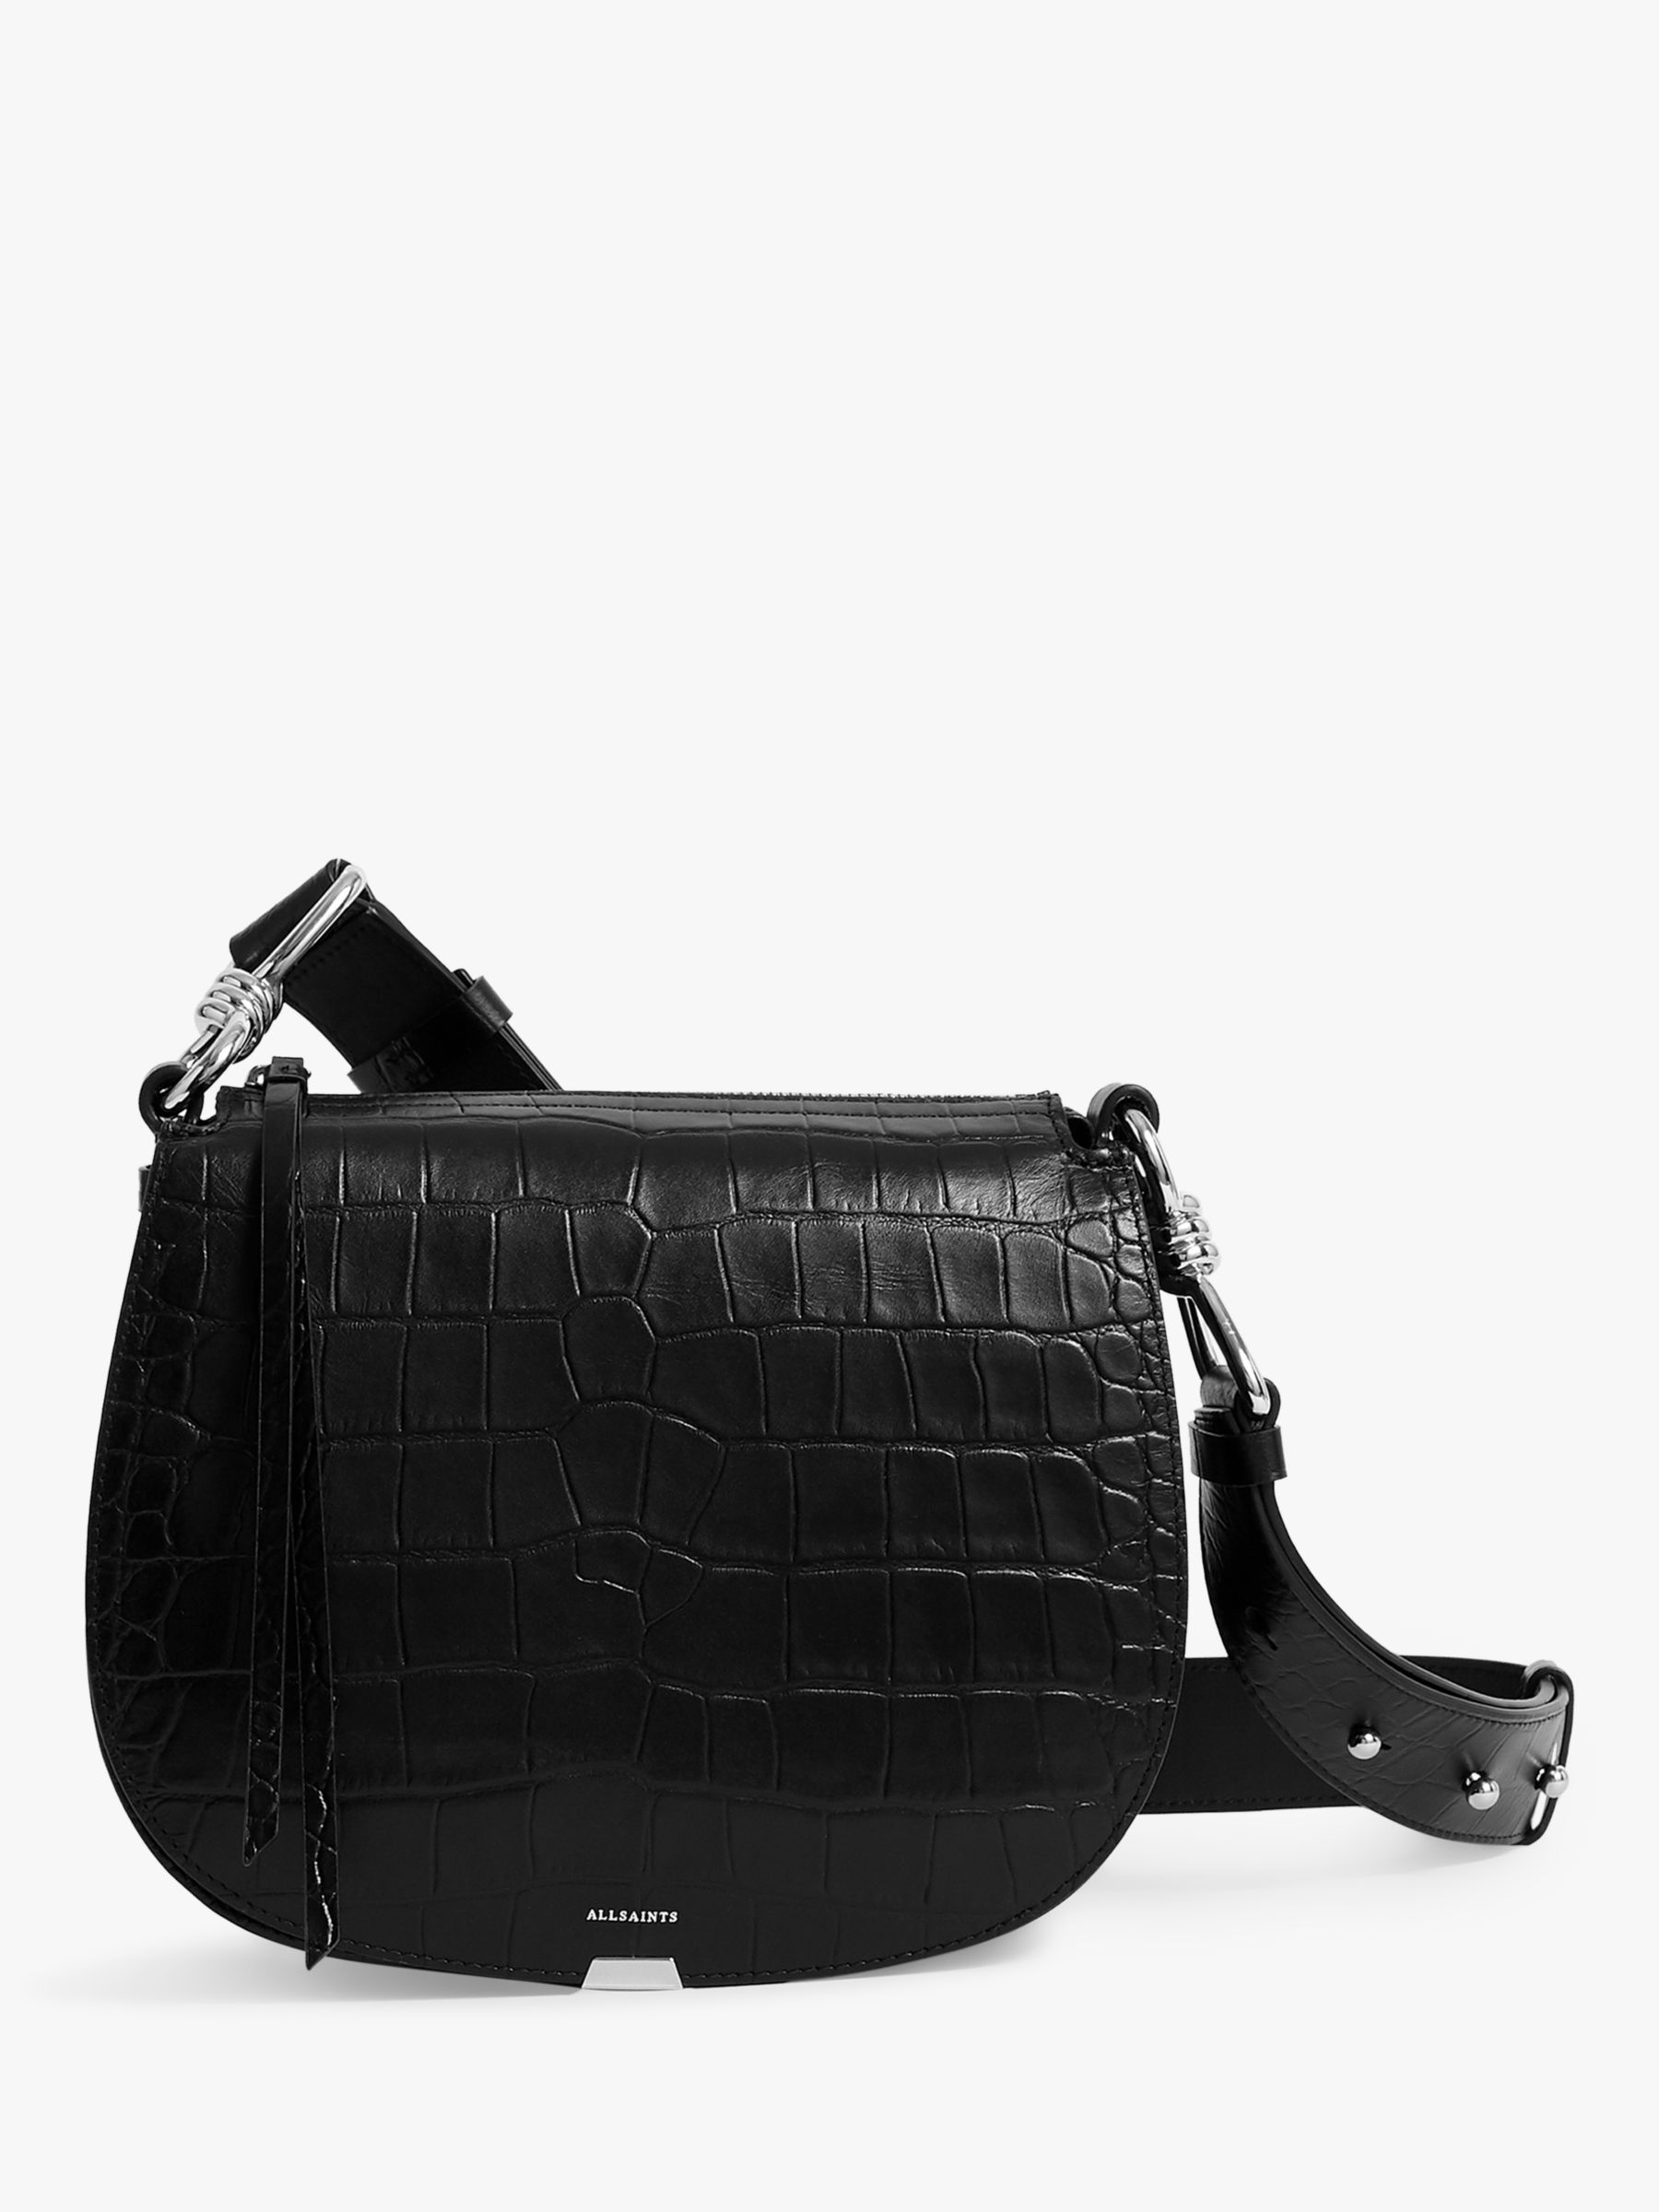 AllSaints Polly Leather Croc Embossed Crossbody Bag, Black at John Lewis & Partners